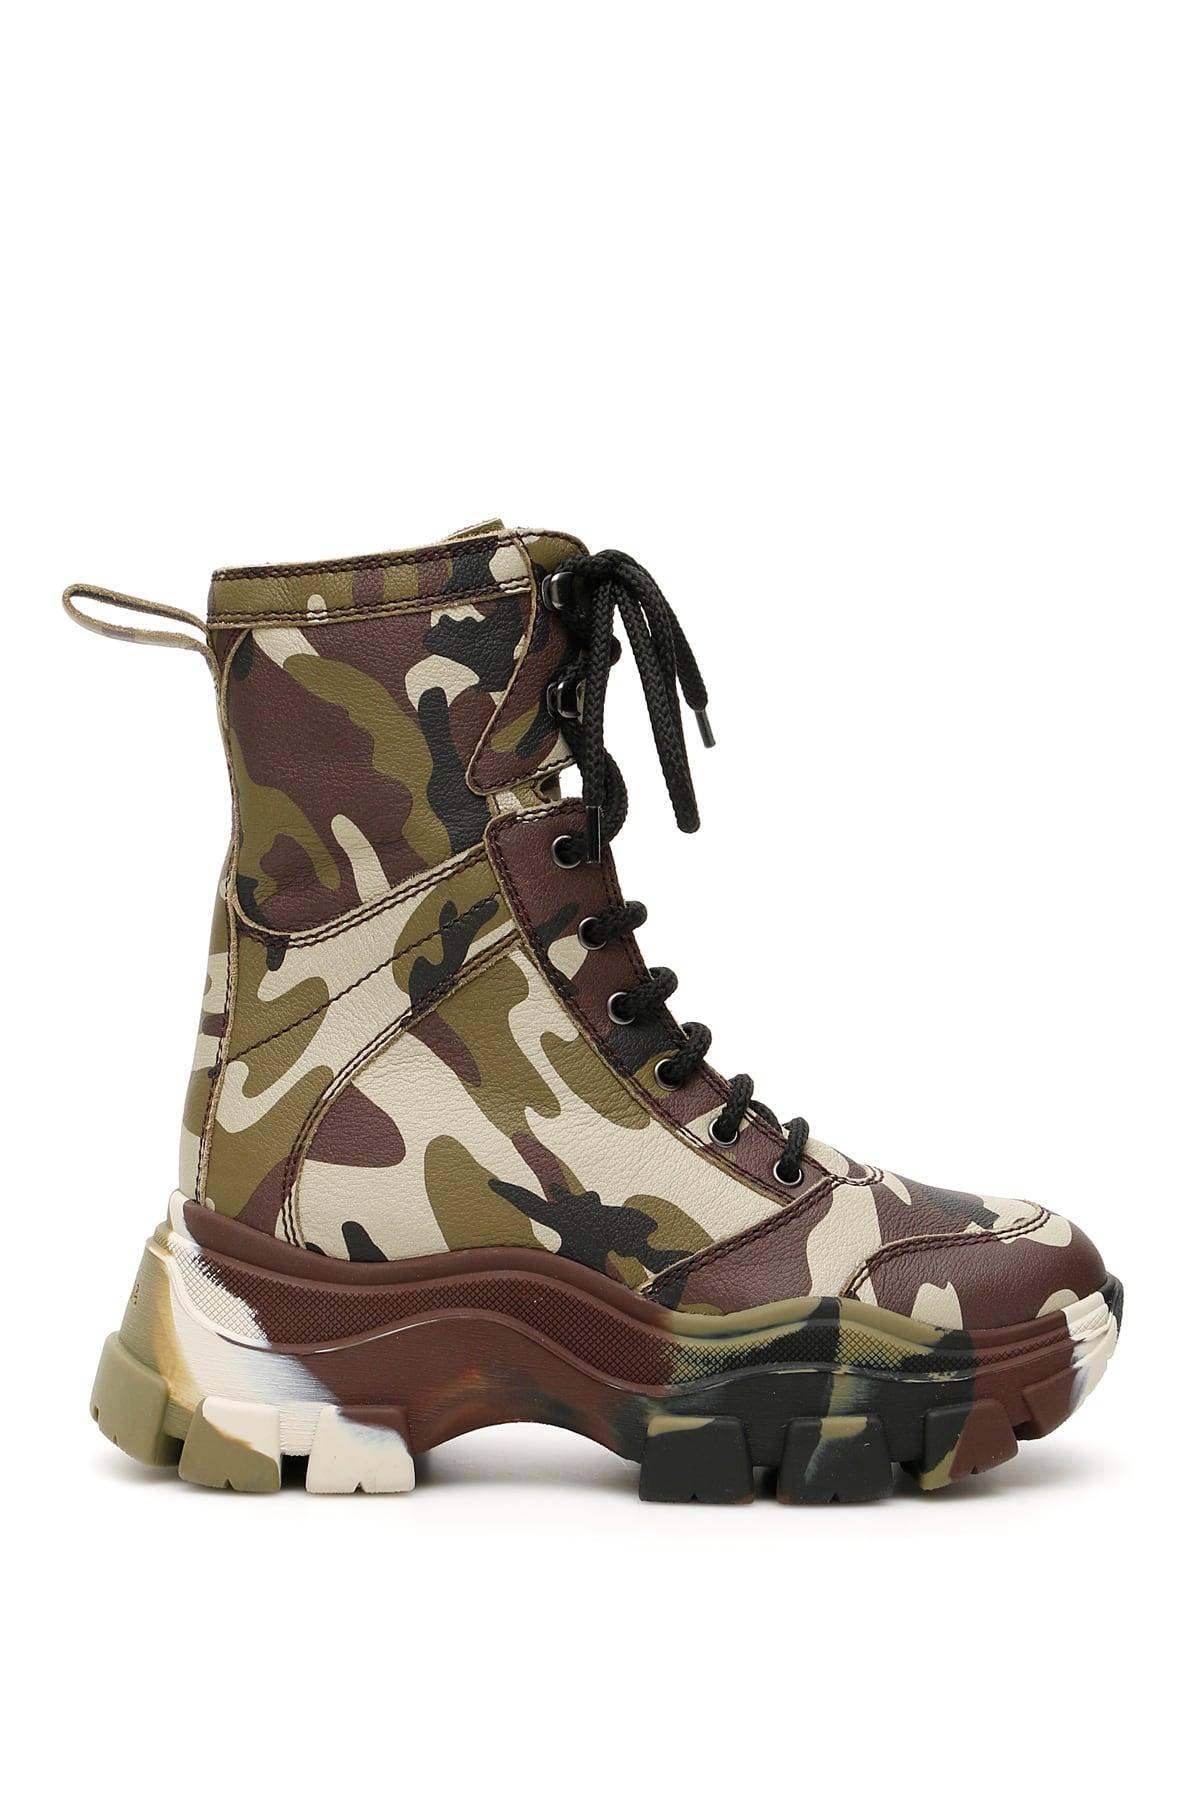 prada army shoes